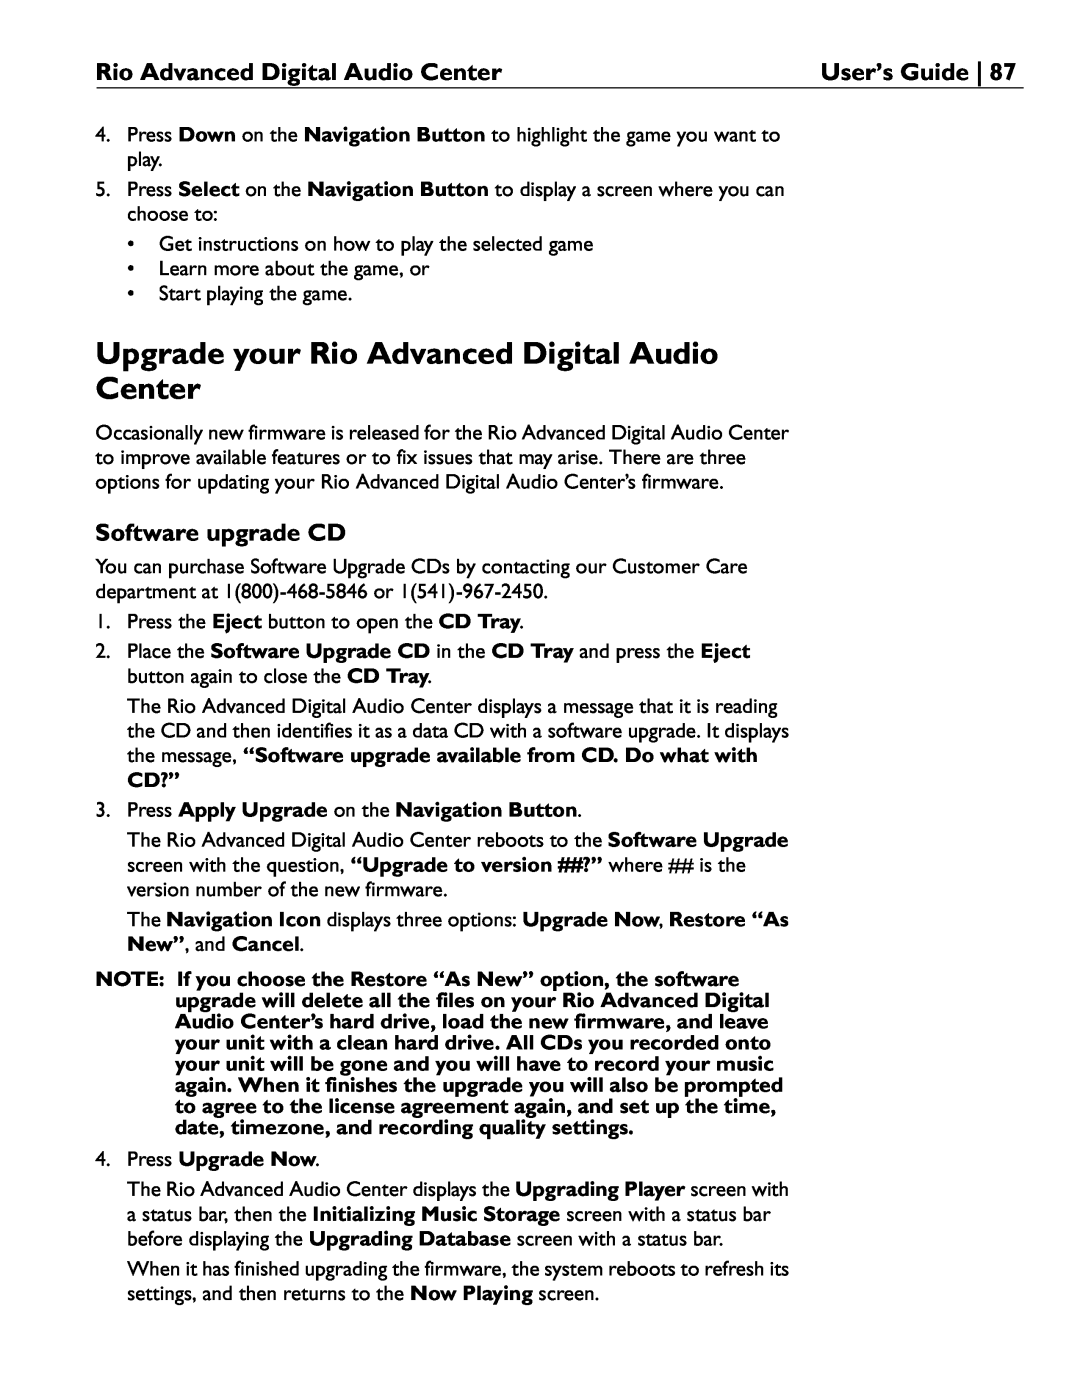 Rio Audio manual Upgrade your Rio Advanced Digital Audio Center, Software upgrade CD, User’s Guide 